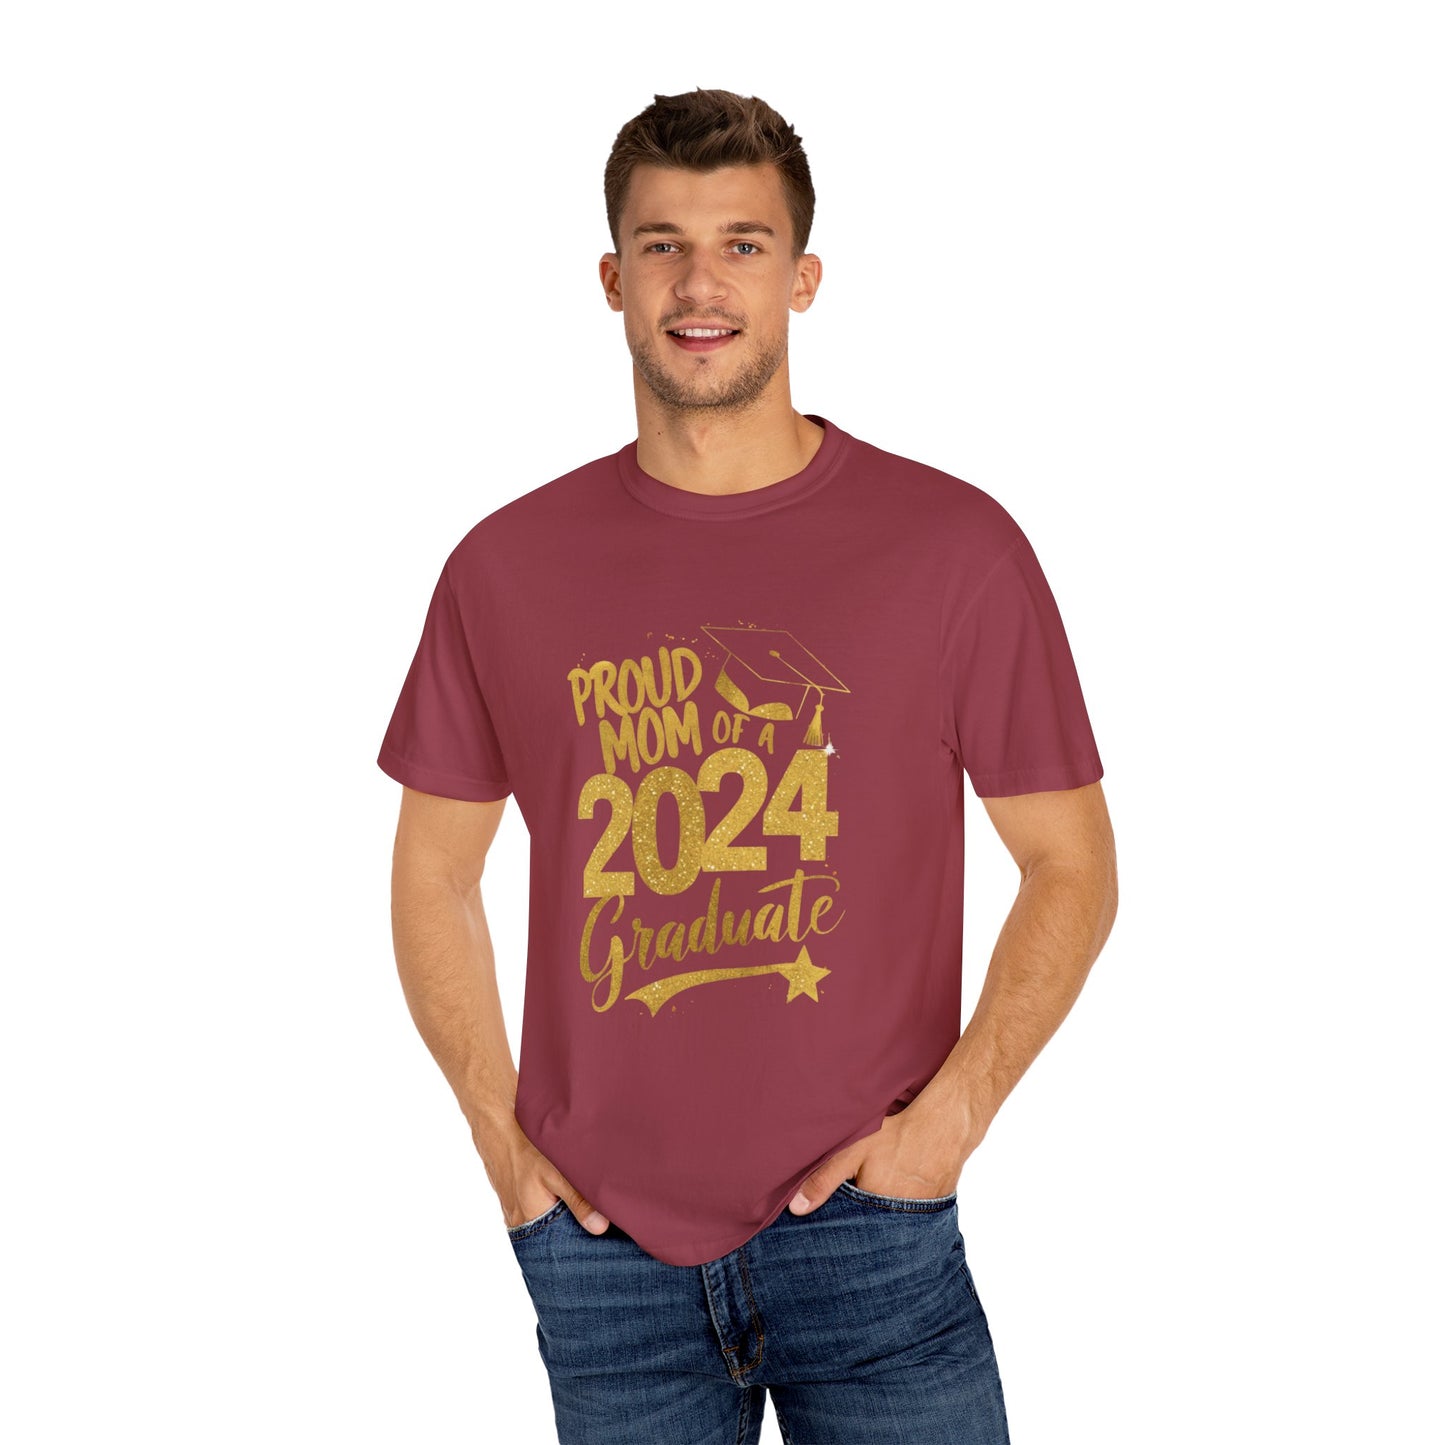 Proud of Mom 2024 Graduate Unisex Garment-dyed T-shirt Cotton Funny Humorous Graphic Soft Premium Unisex Men Women Chili T-shirt Birthday Gift-36